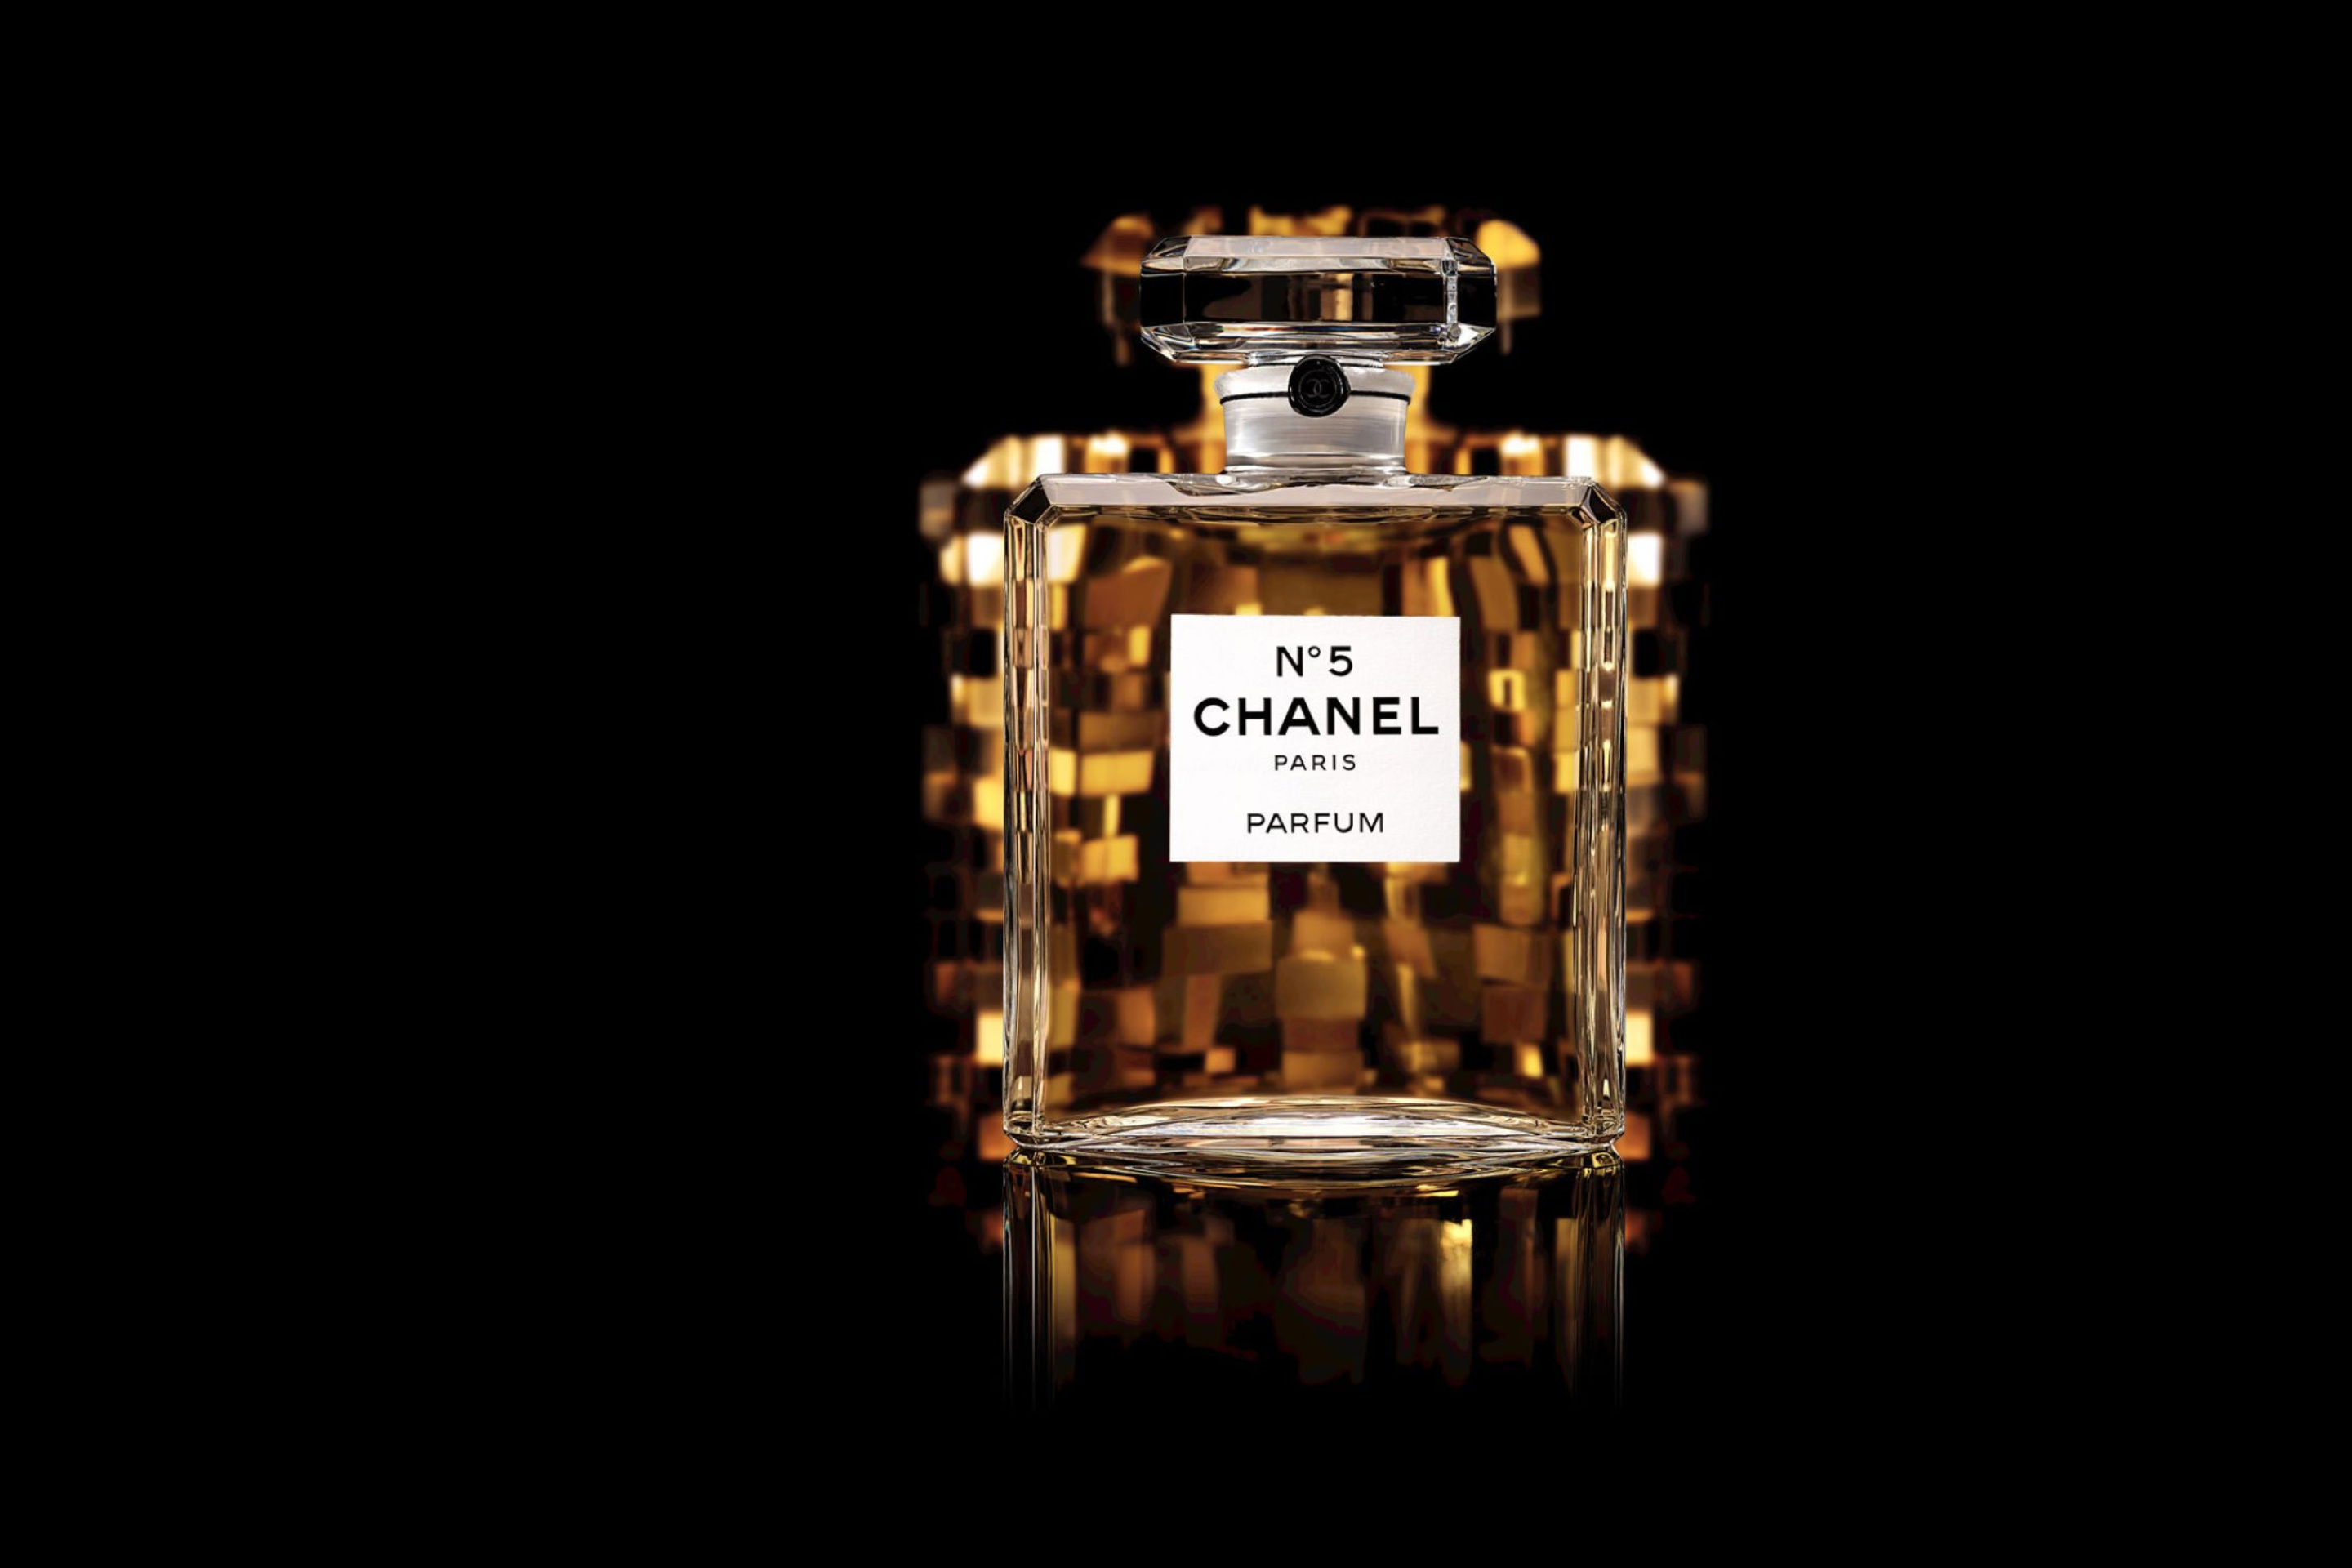 Das Chanel 5 Fragrance Perfume Wallpaper 2880x1920